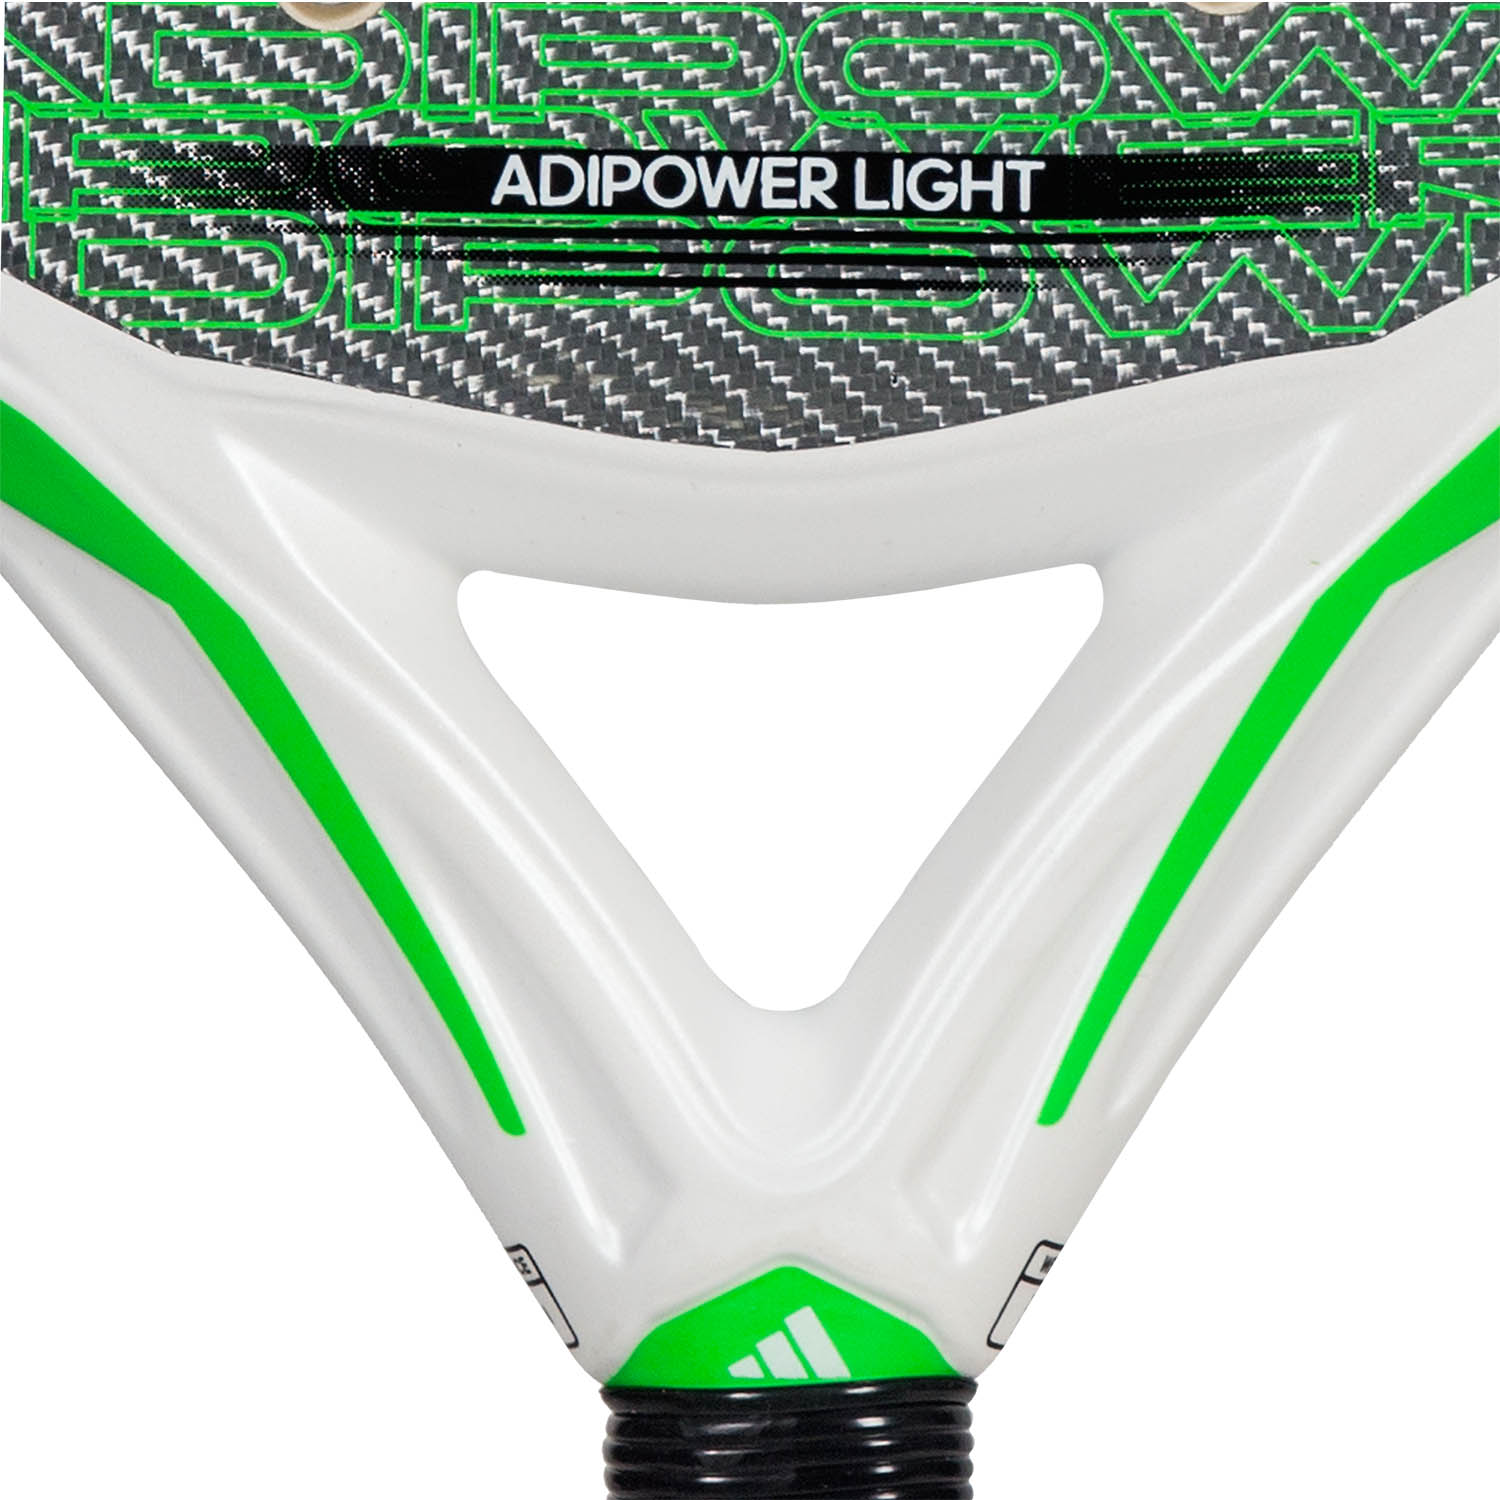 adidas Adipower Light 3.3 Padel - White/Green